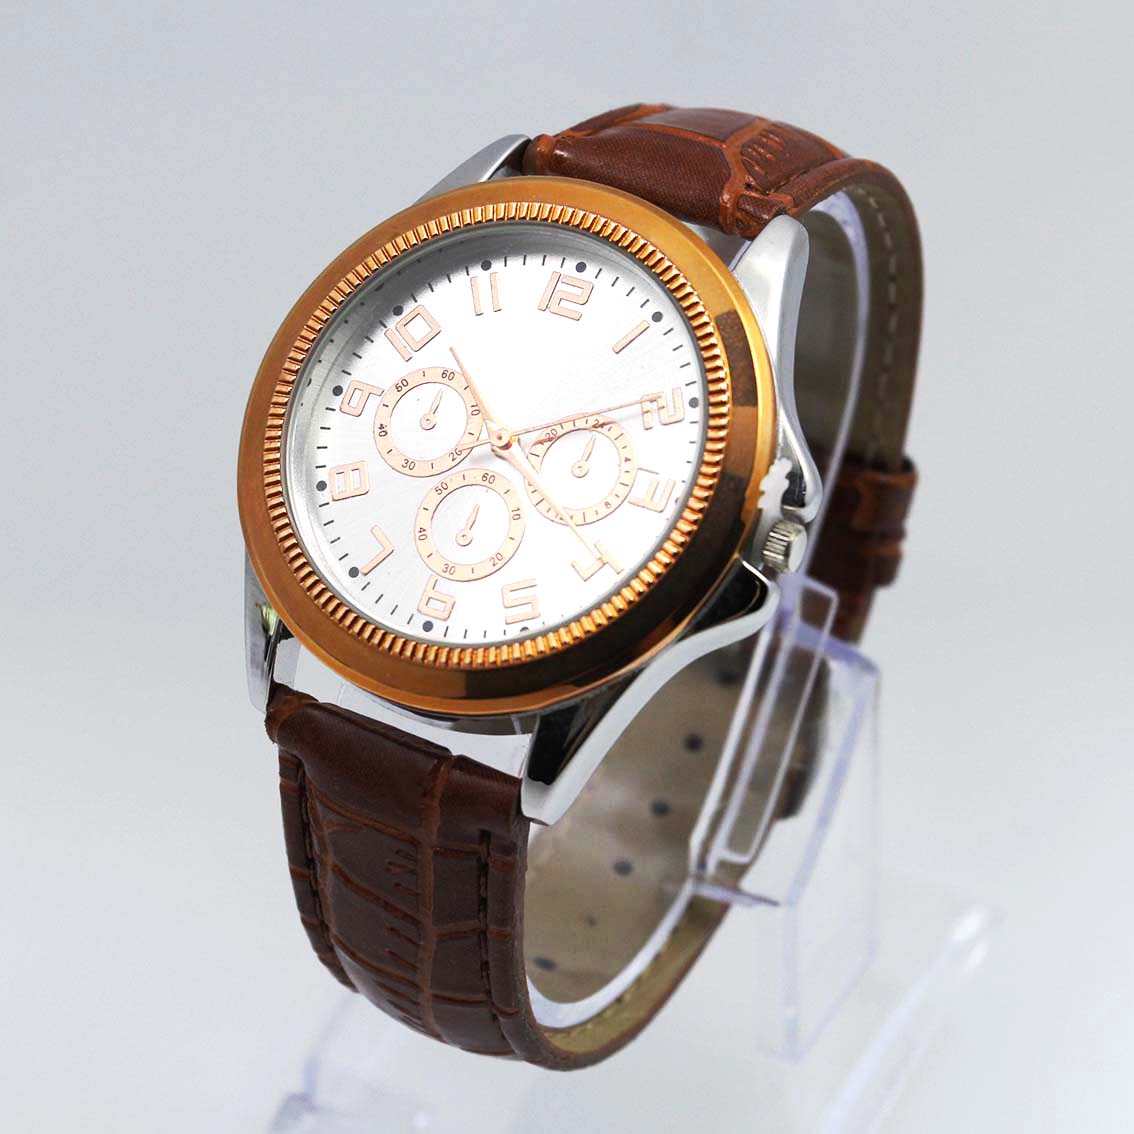 #02117Men's wristwatch quartz analog leather strap watch